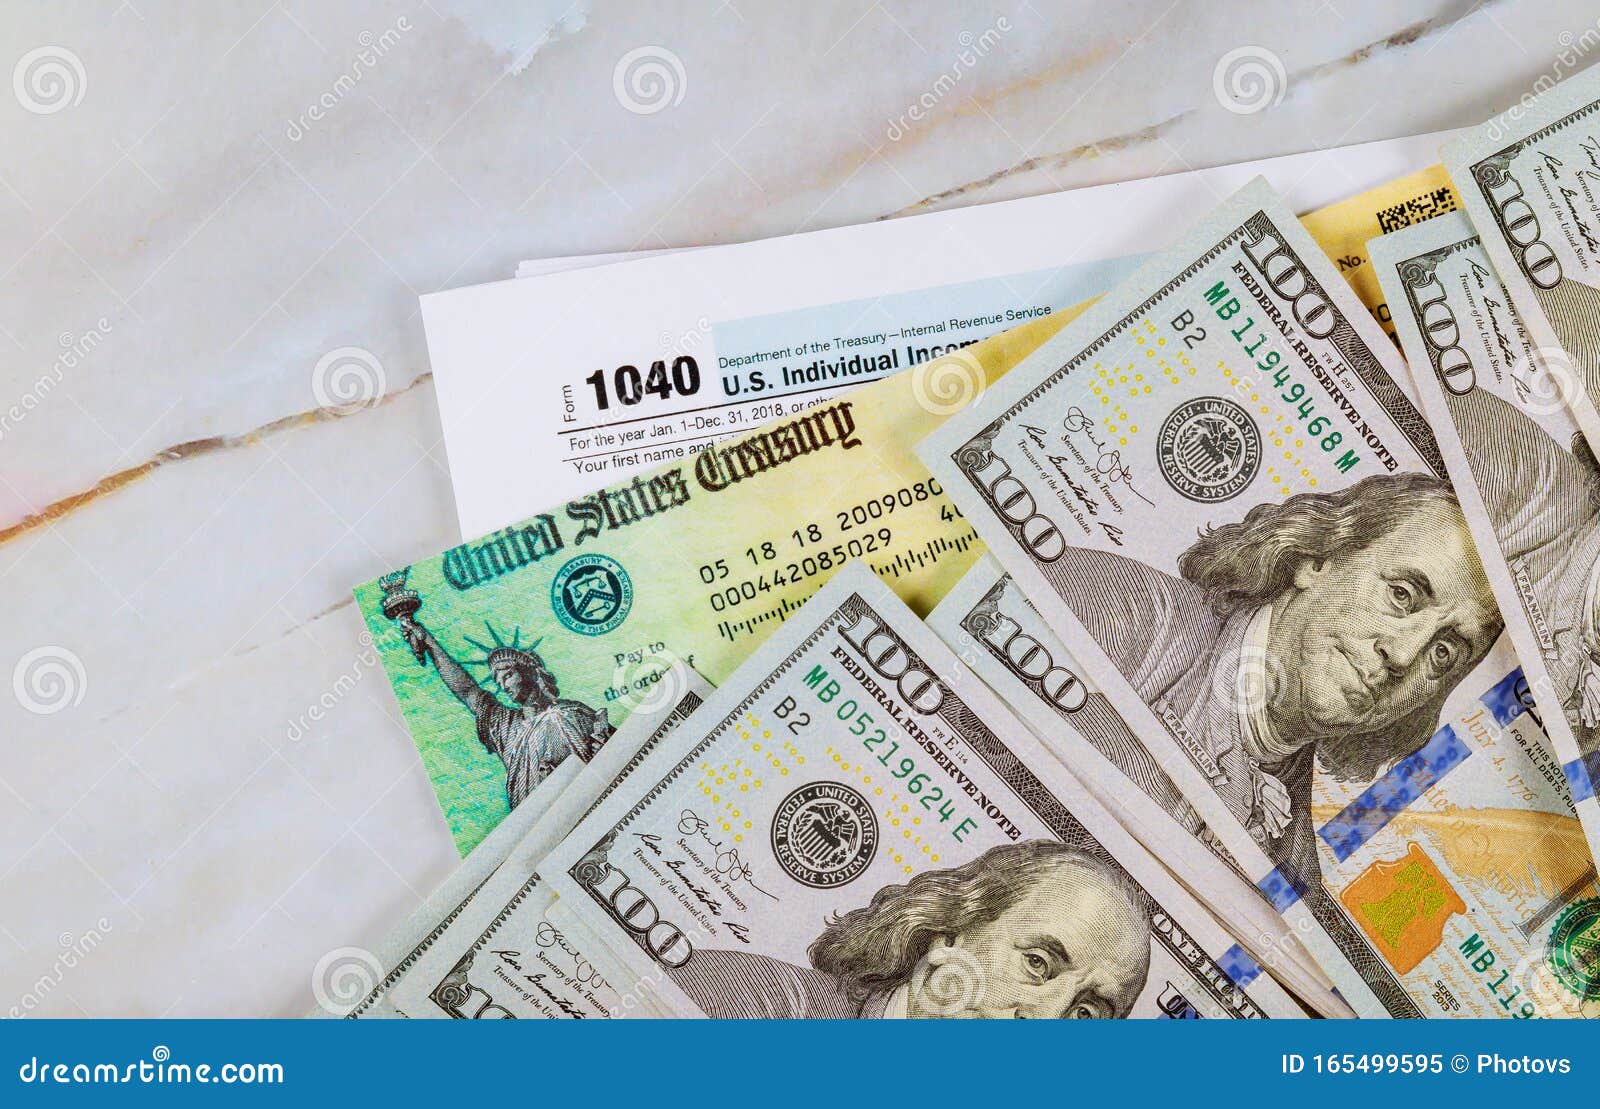 stimulus-economic-tax-return-check-and-us-100-dollar-bills-currency